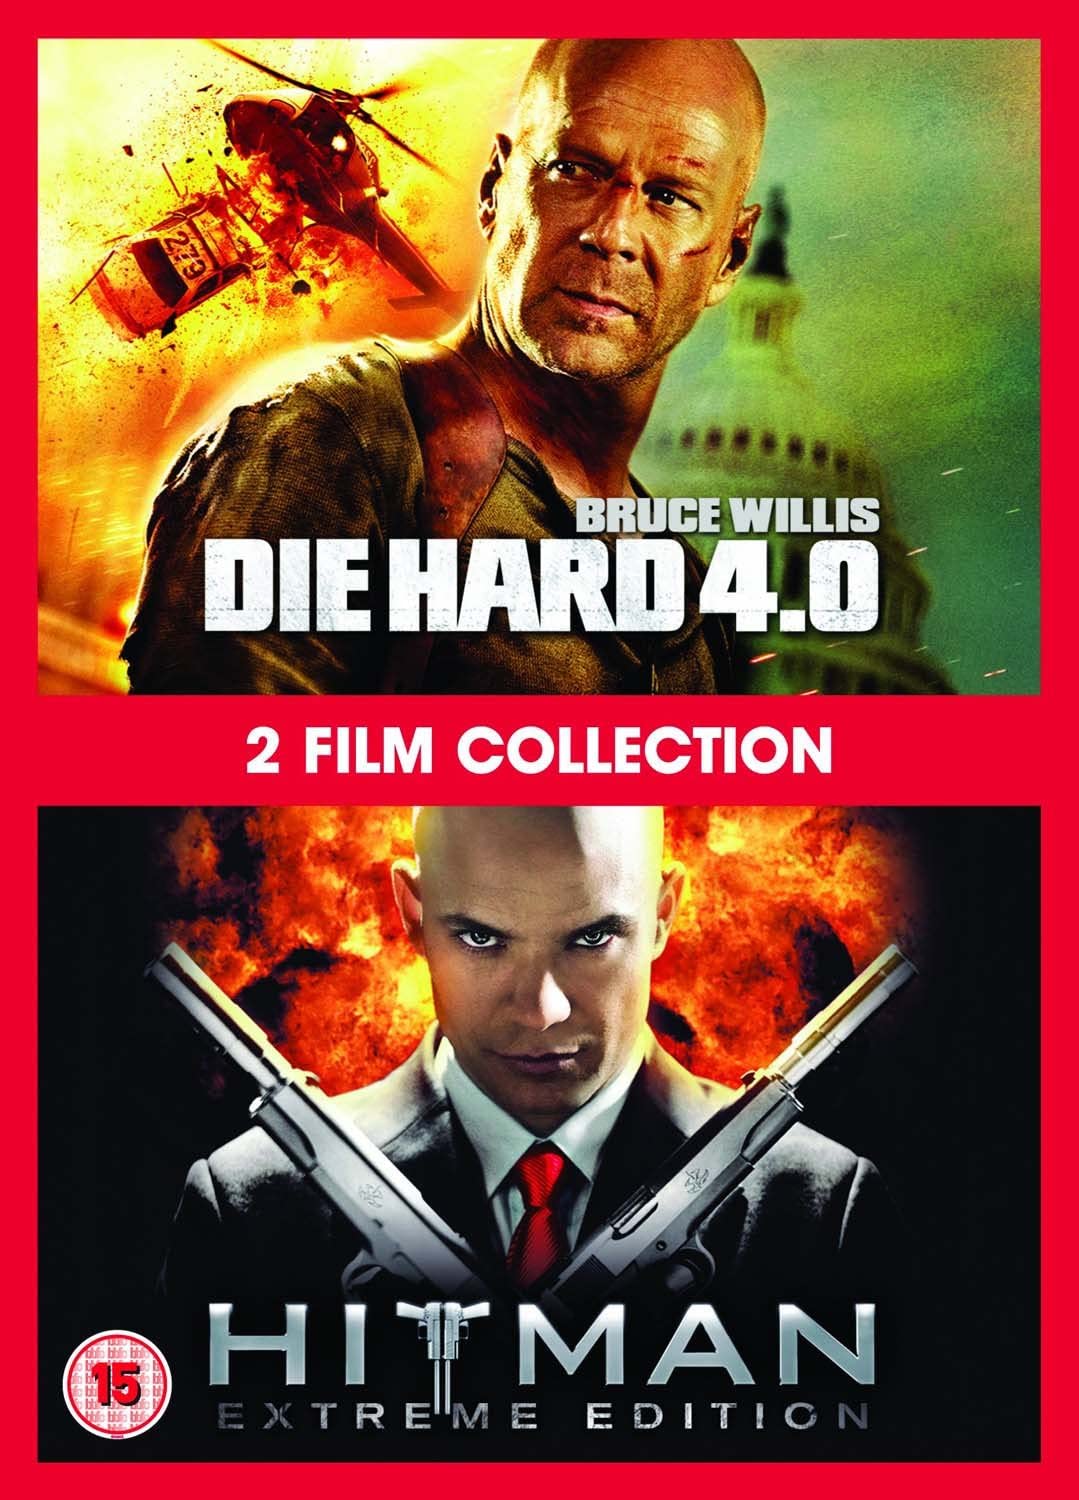 Hitman / Die Hard 4.0 Double Pack - Action/Thriller [DVD]